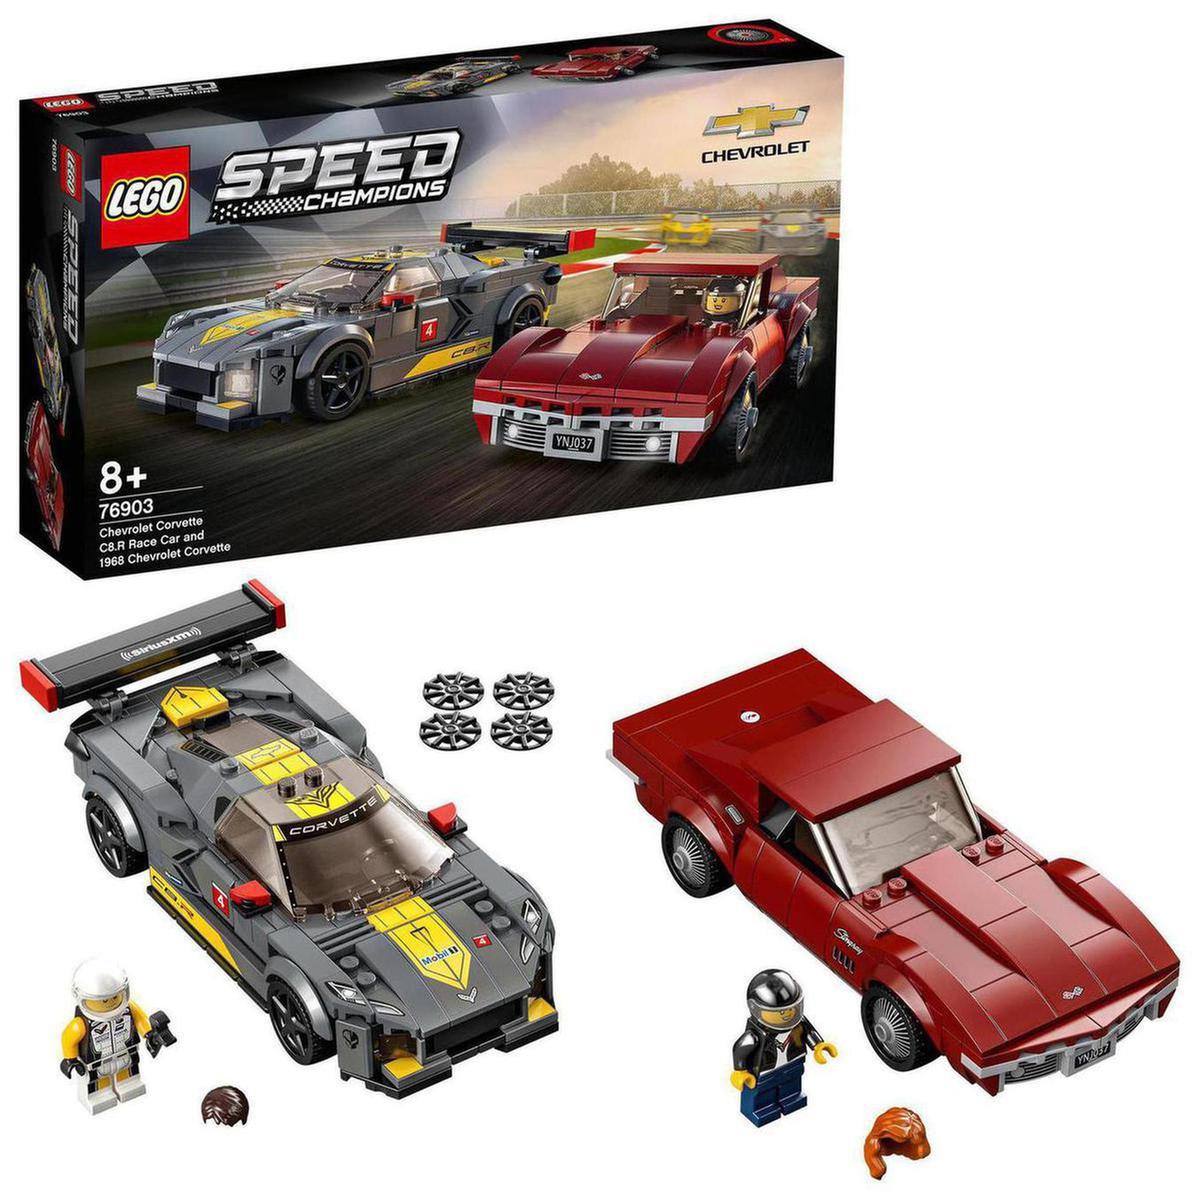 LEGO Speed Champions - Desportivo Chevrolet Corvette C8.R e Chevrolet  Corvette de 1968 - 76903 | LEGO RACERS | Loja de brinquedos e videojogos  Online Toysrus